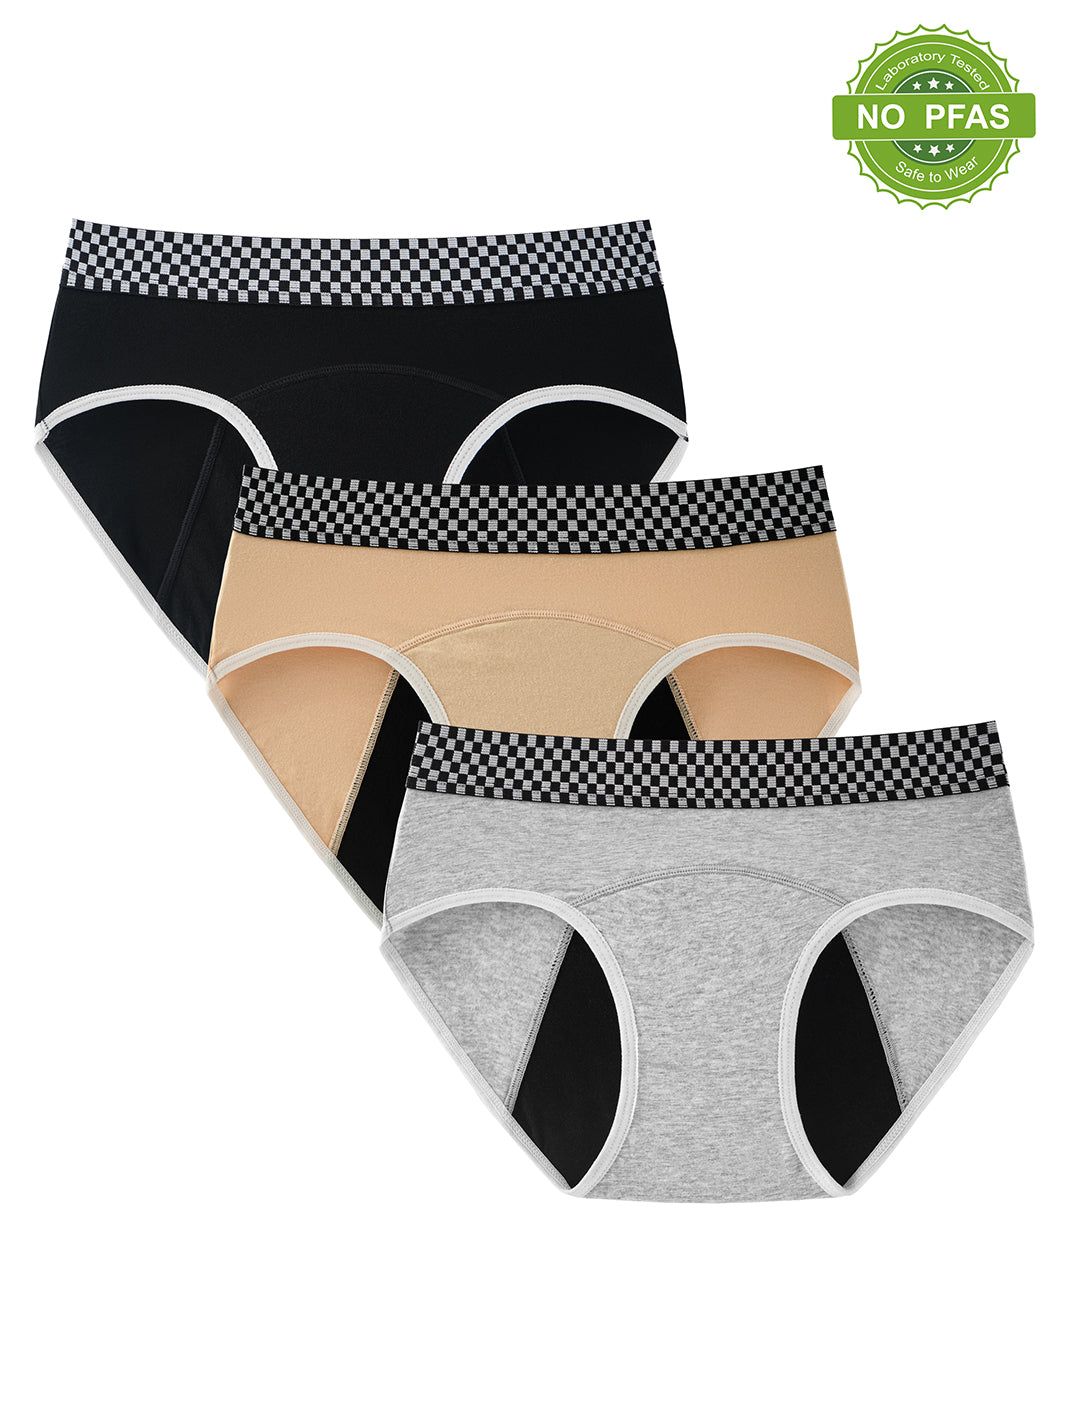 INNERSY Big Girls' Period Panties Menstrual Underwear for First Period  Starter 3-Pack (L(12-14 yrs), Dot&Stripe) 